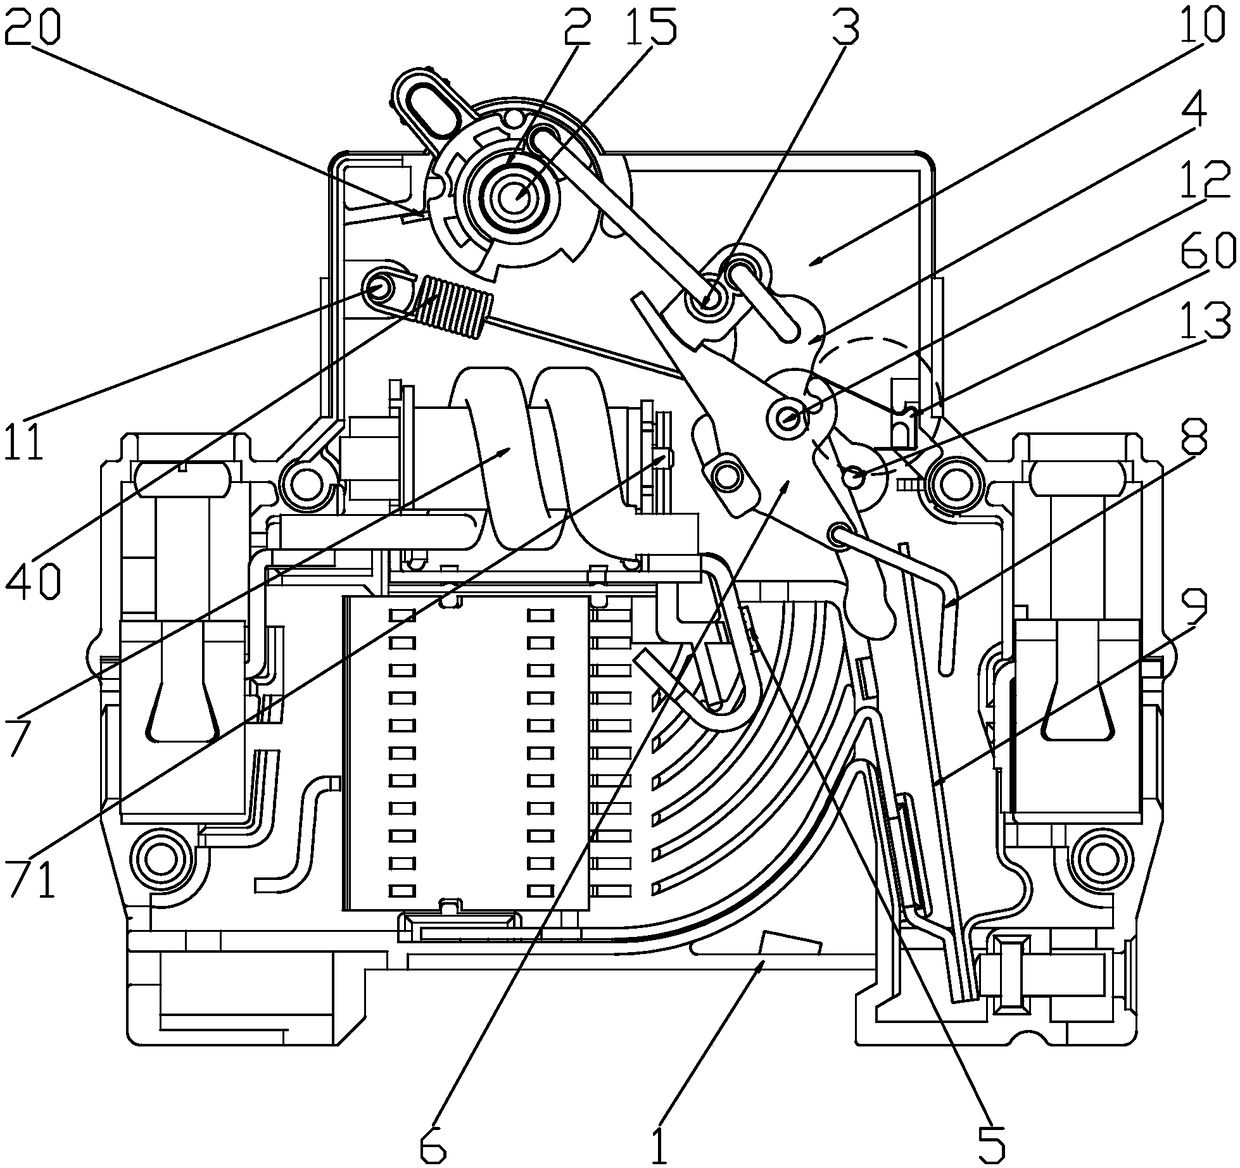 Circuit breaker operating mechanism and assembling method thereof